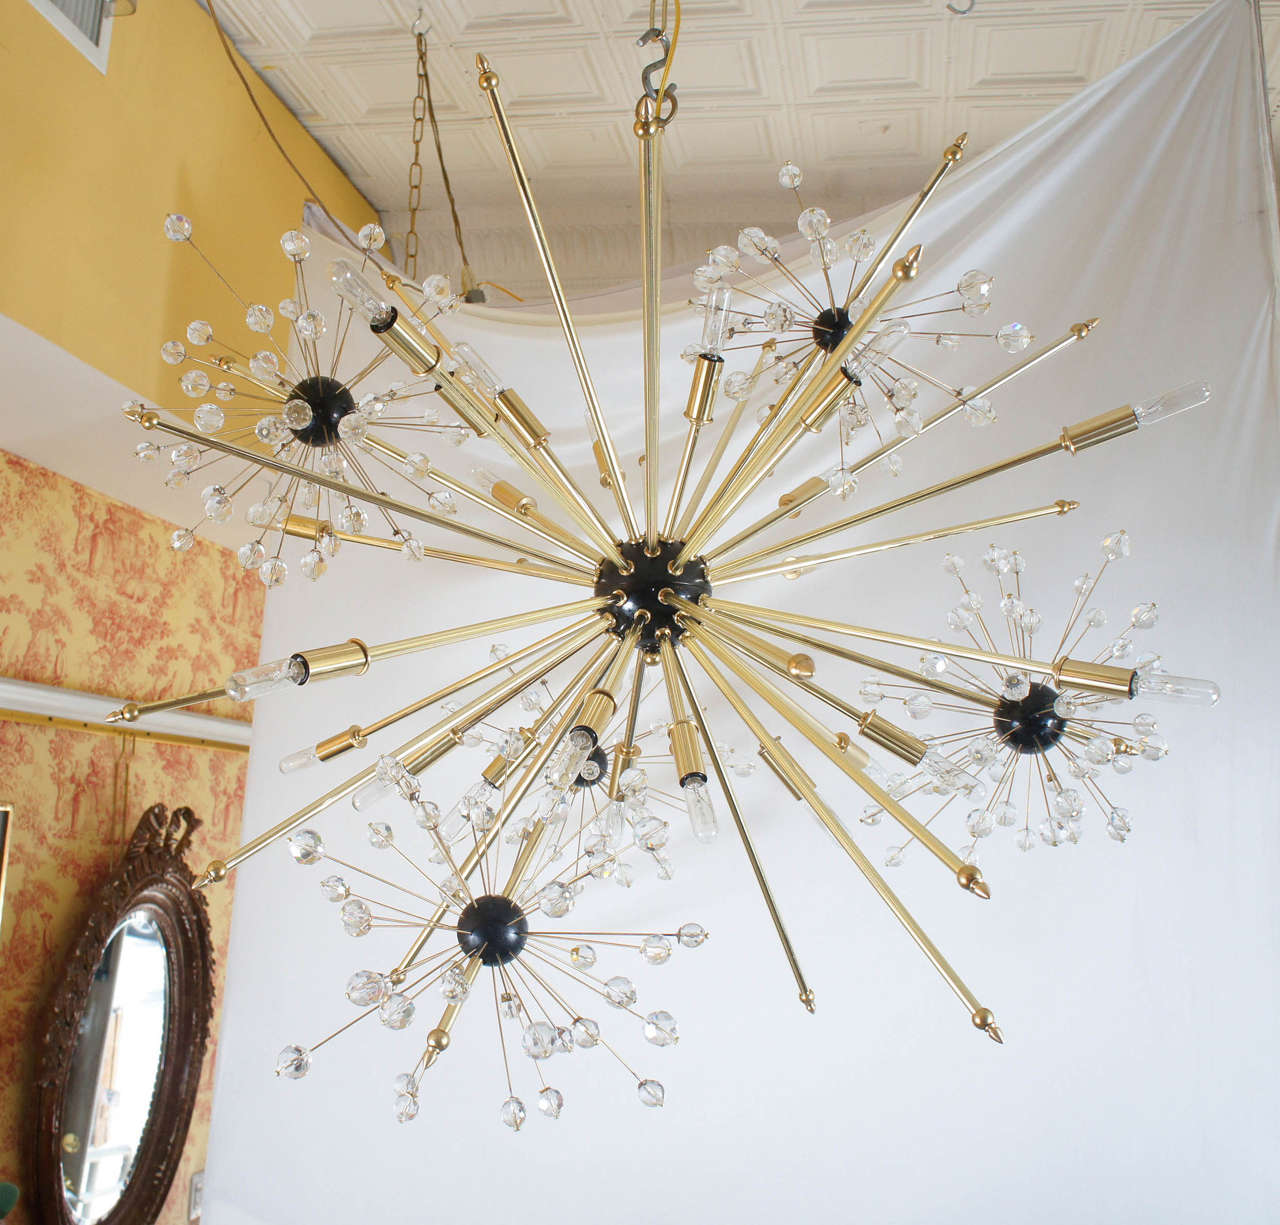 Original chandelier custom, created by National known artist Lou Blass.